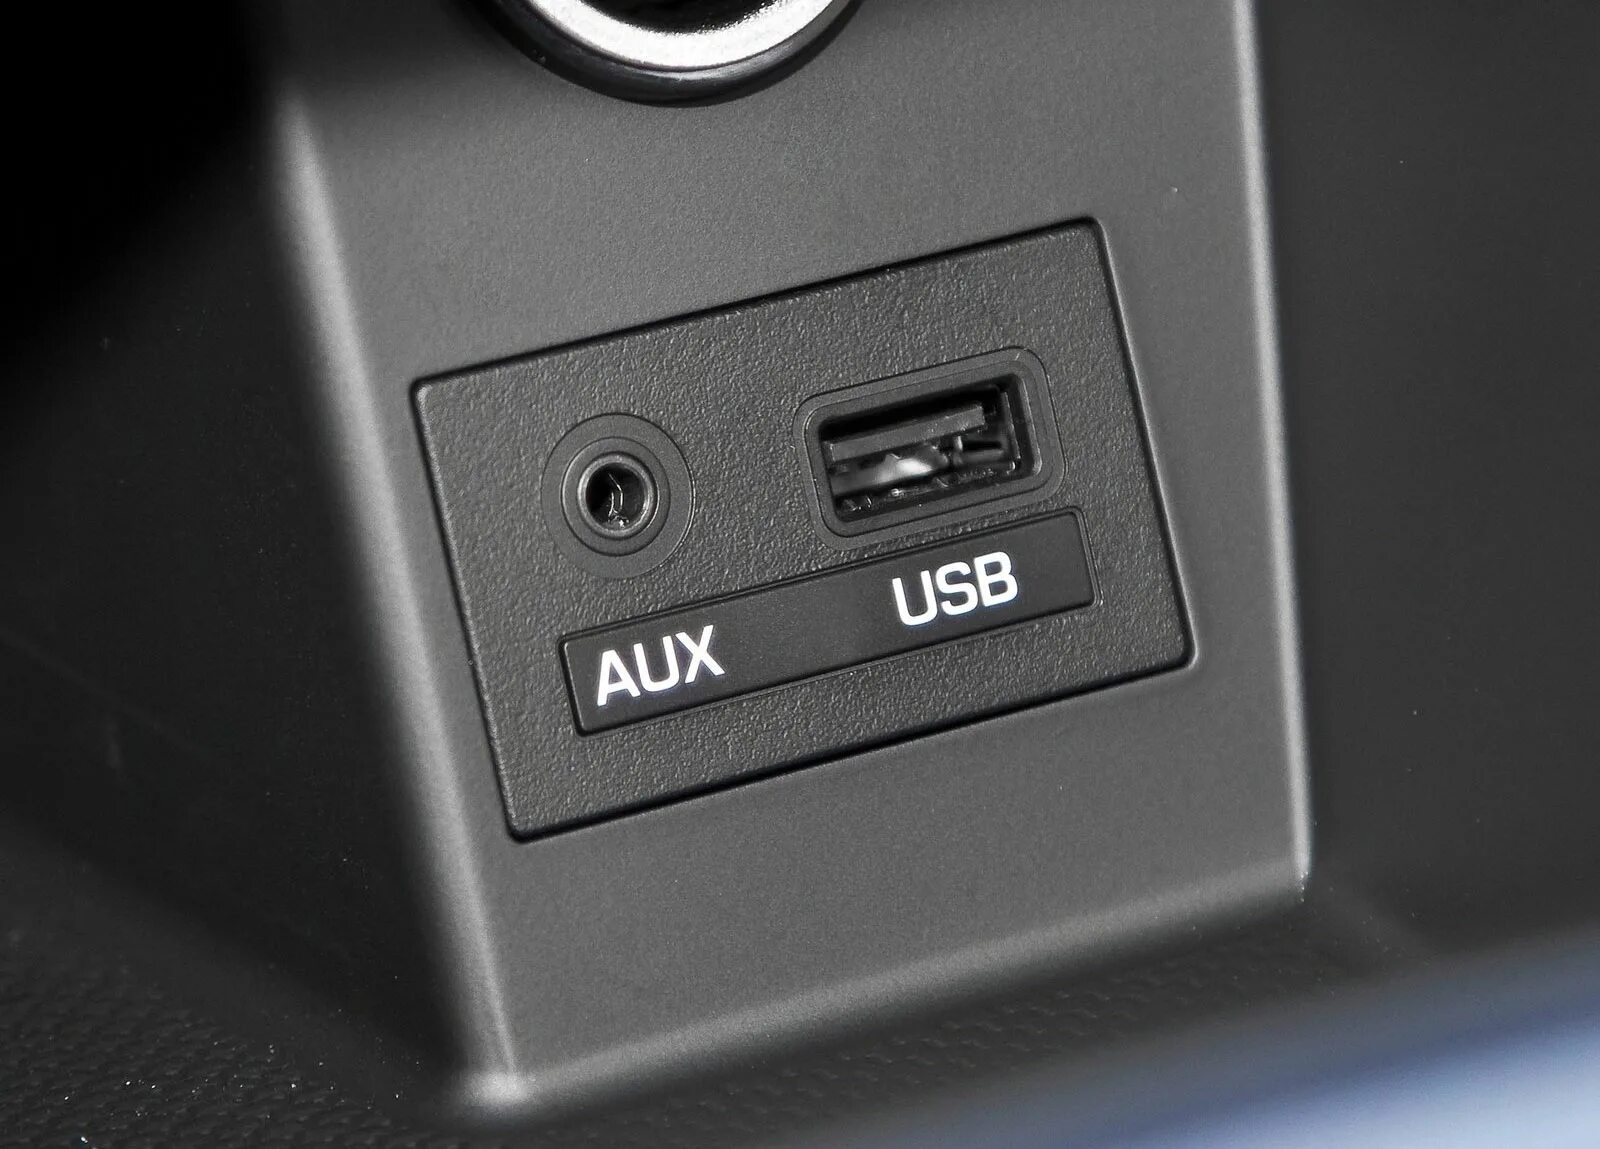 Вход для автомобилей. Aux USB Hyundai ix35. 2usb/aux для q5 FY. USB aux разъем для авто TLC 150. Разъем Hyundai для aux USB.